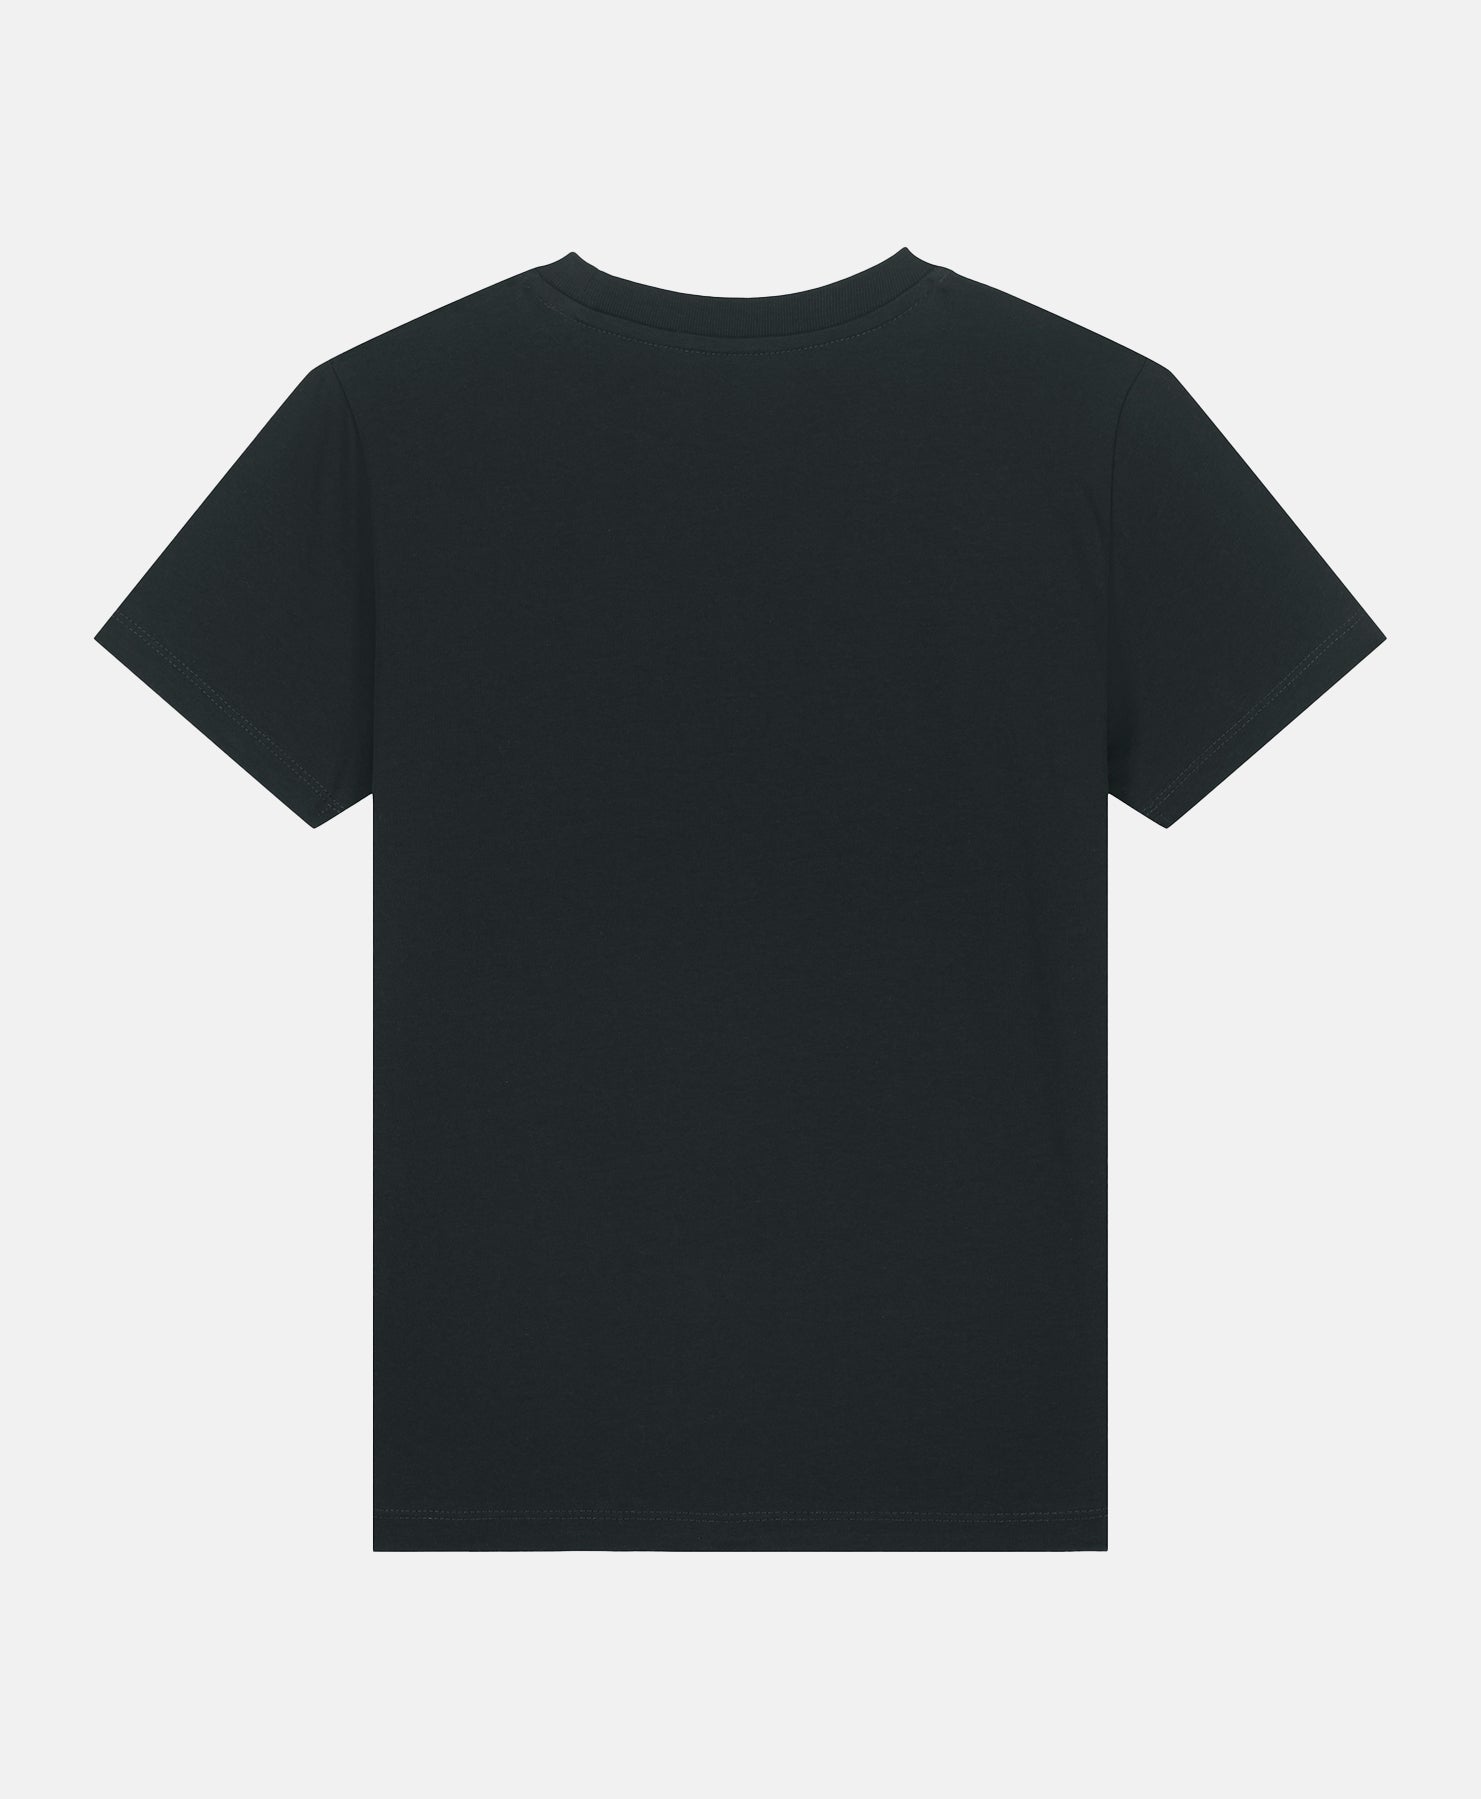 Border Collie T-Shirt Kids Black